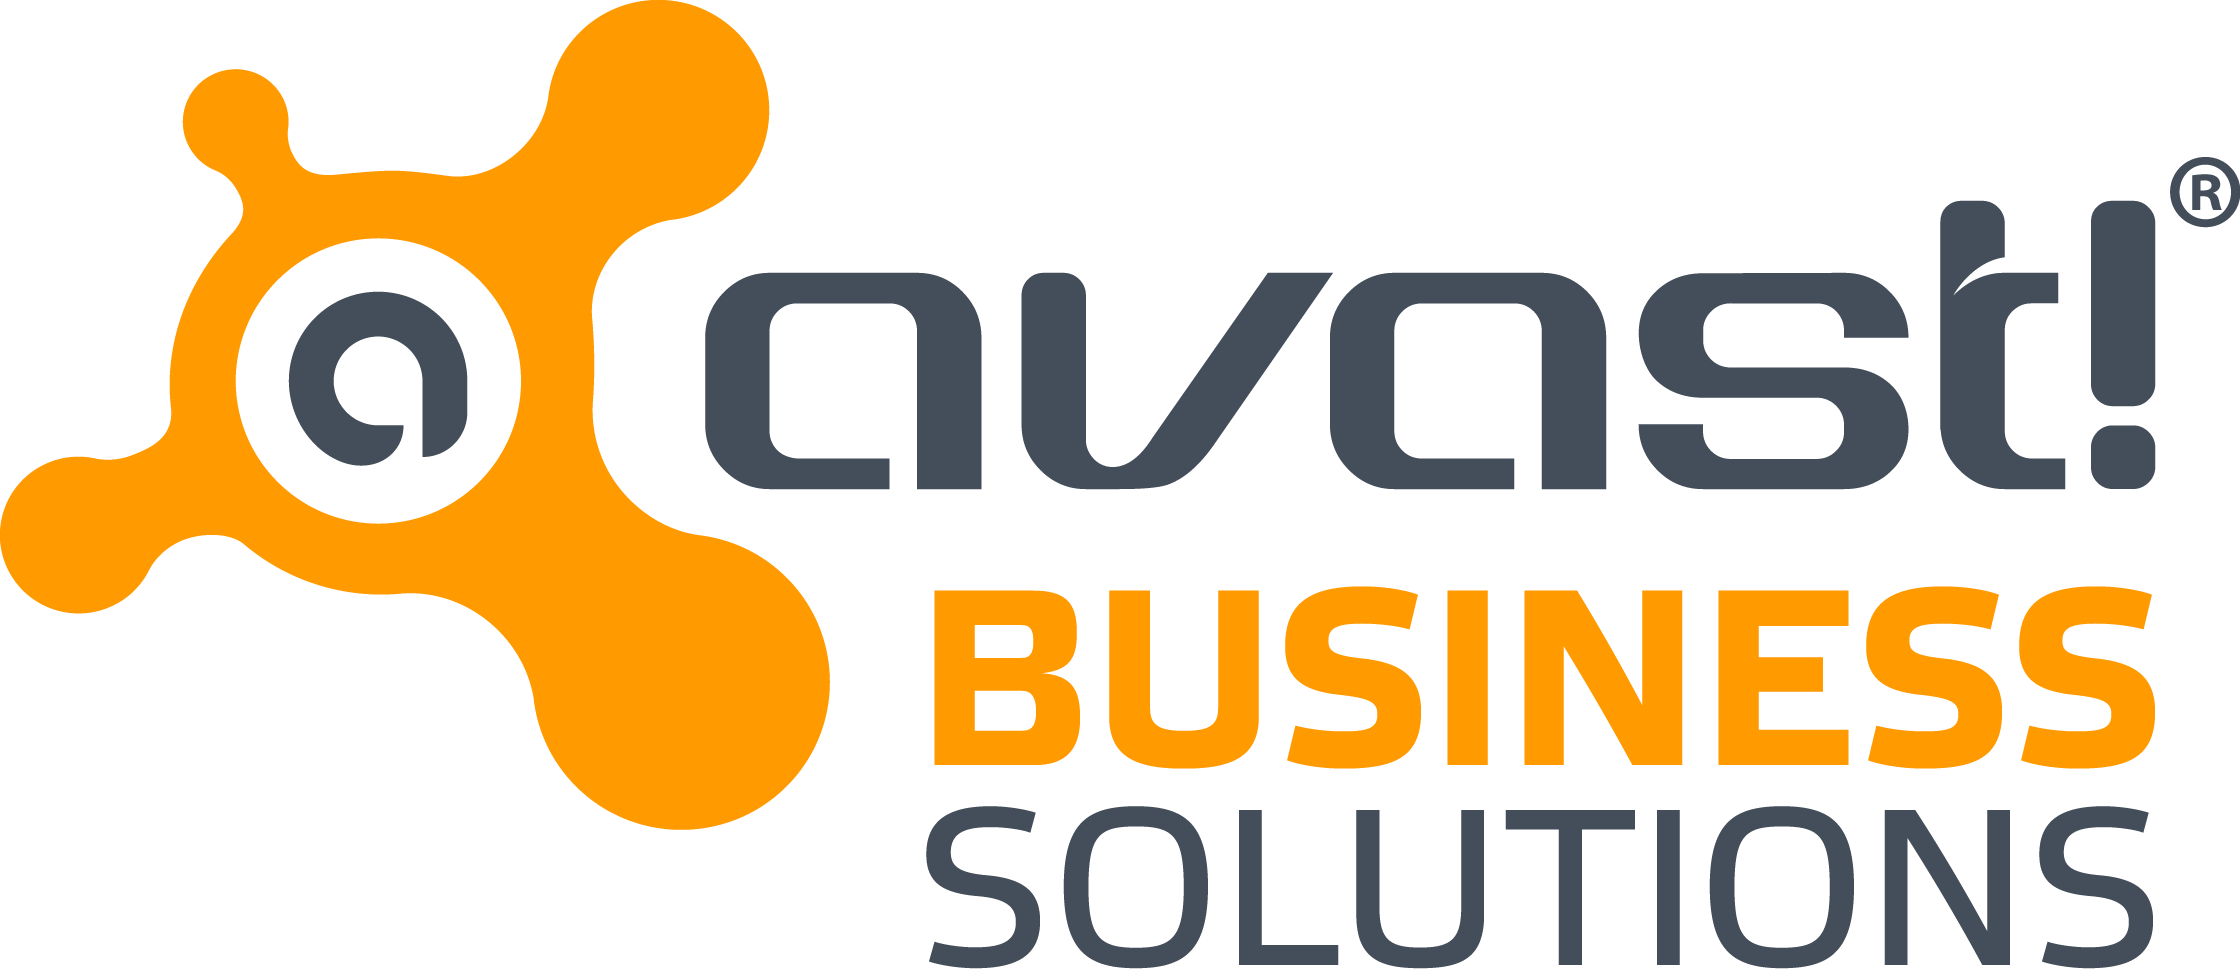 avast-business-solution-logo